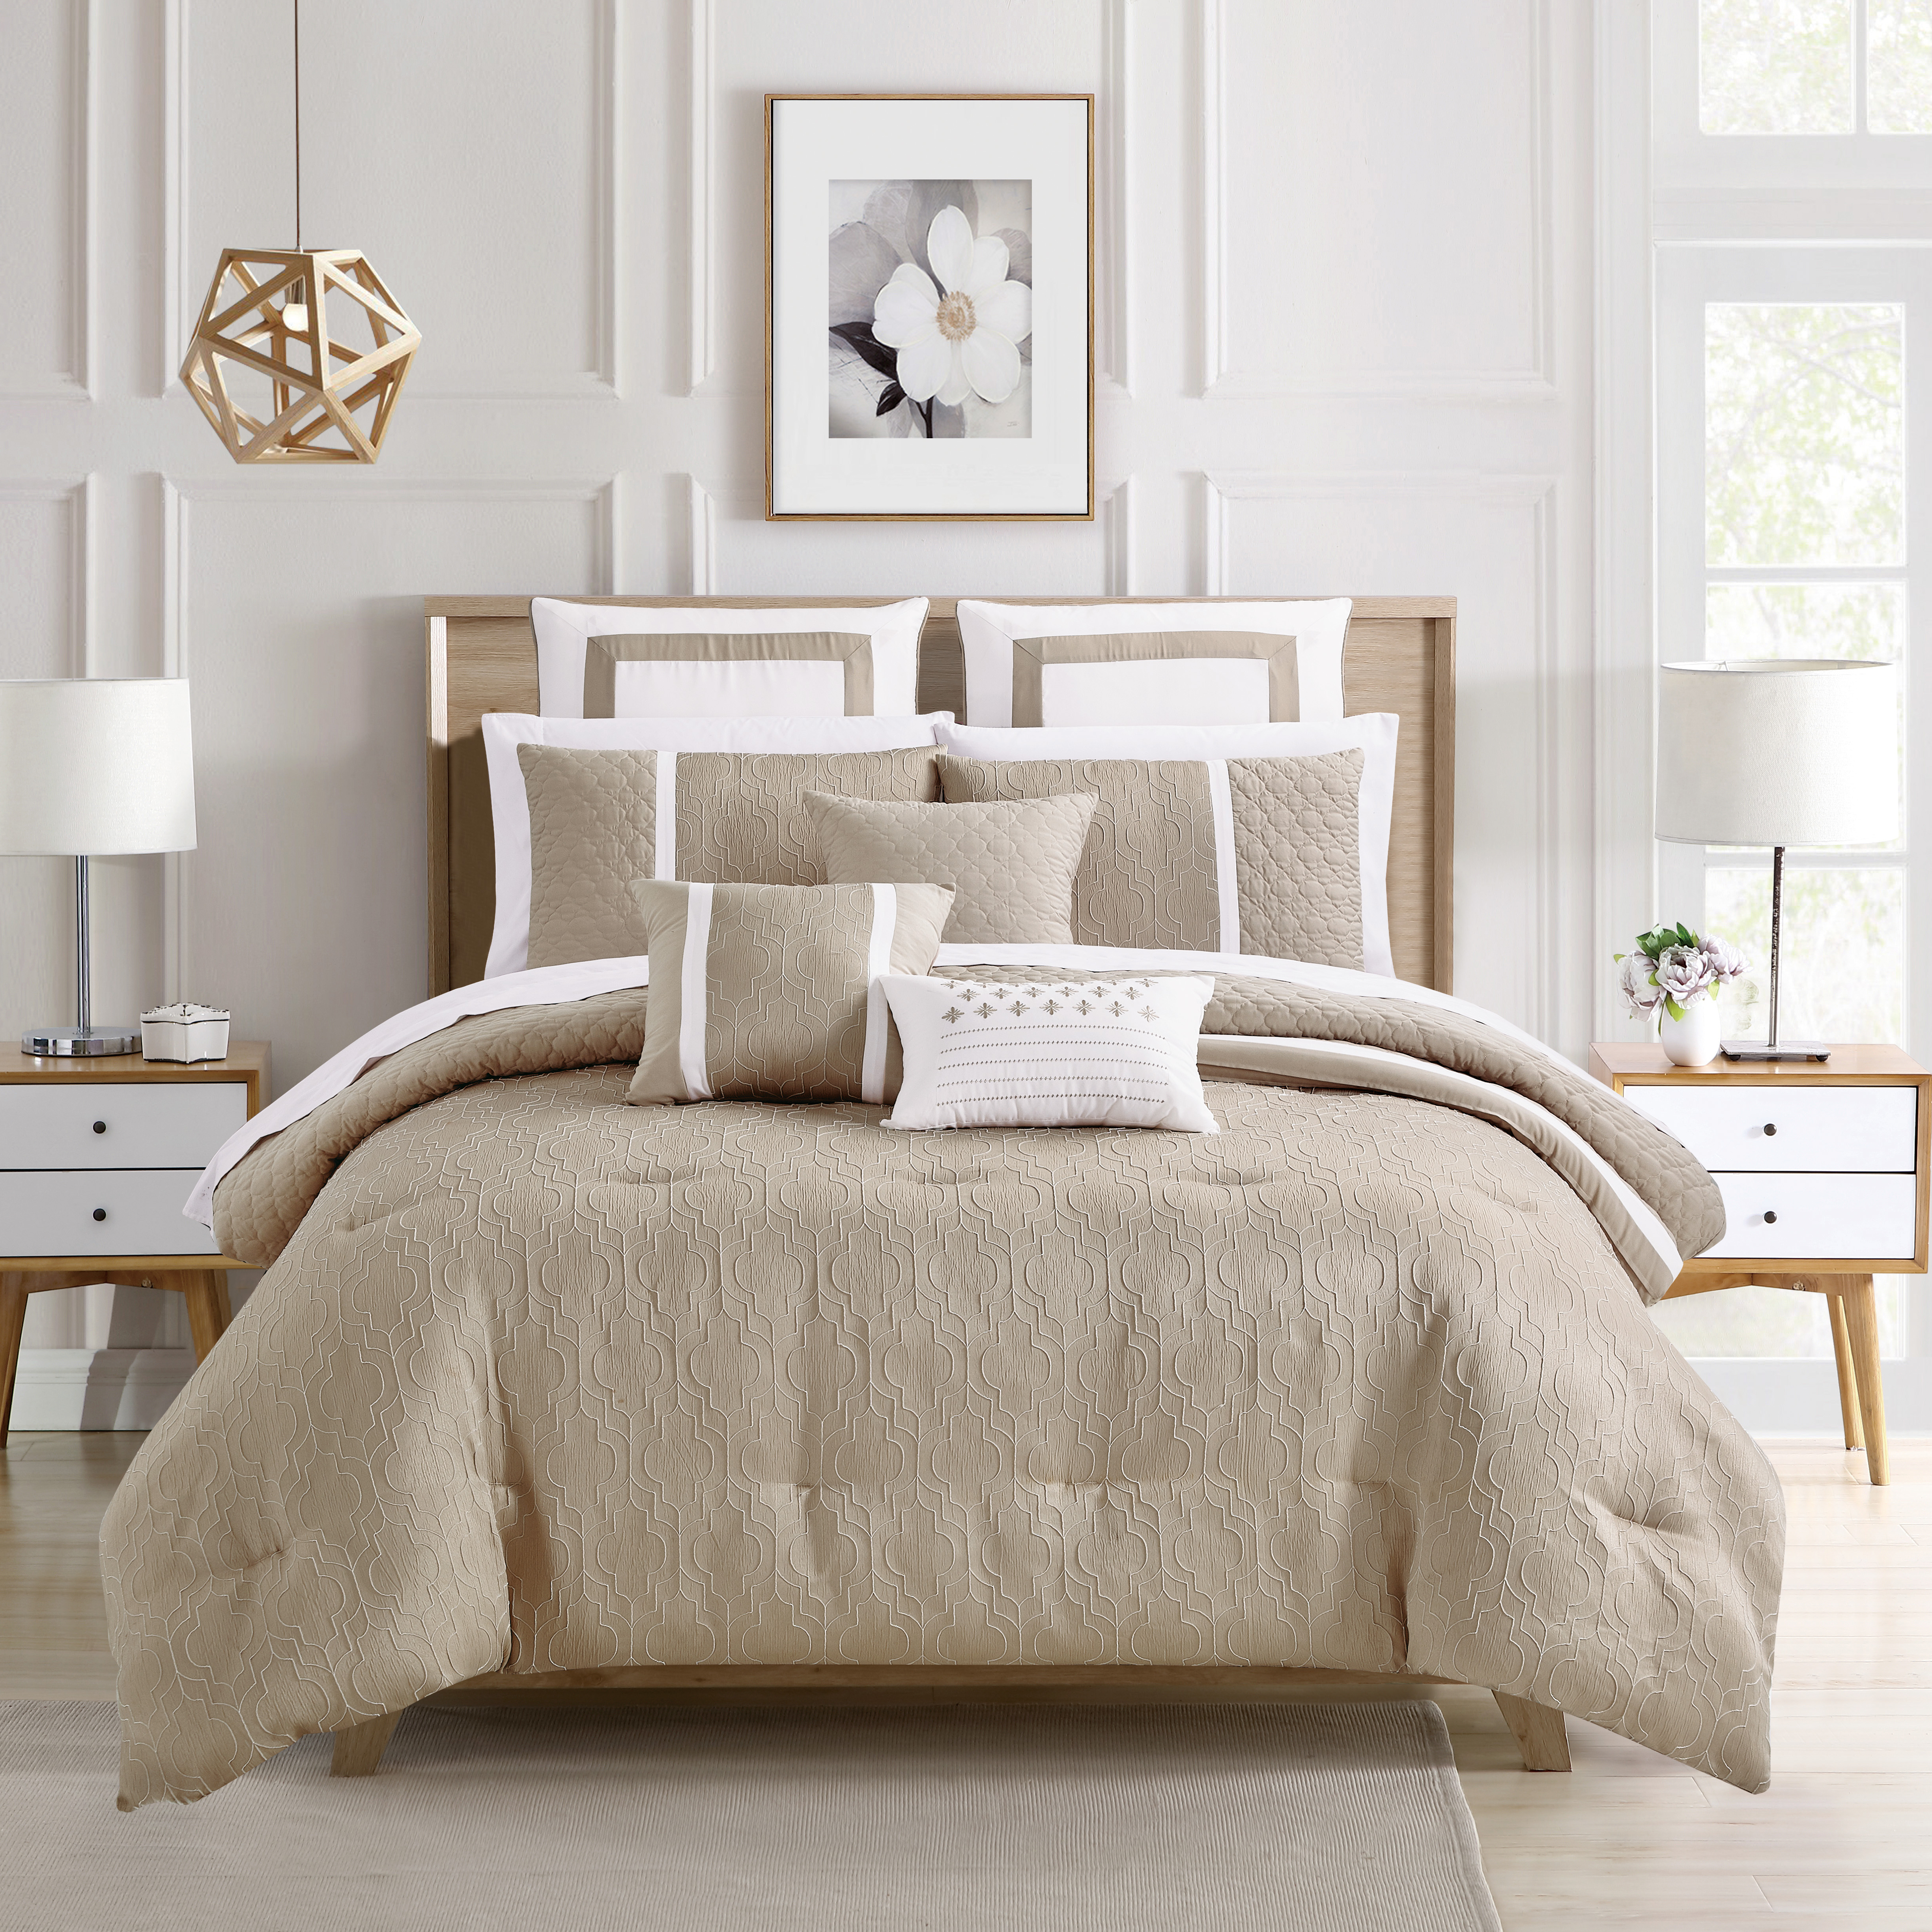 Arlow 8 Piece Comforter Set Jacquard Geometric Quilted Pattern Design Bedding - Grey, King